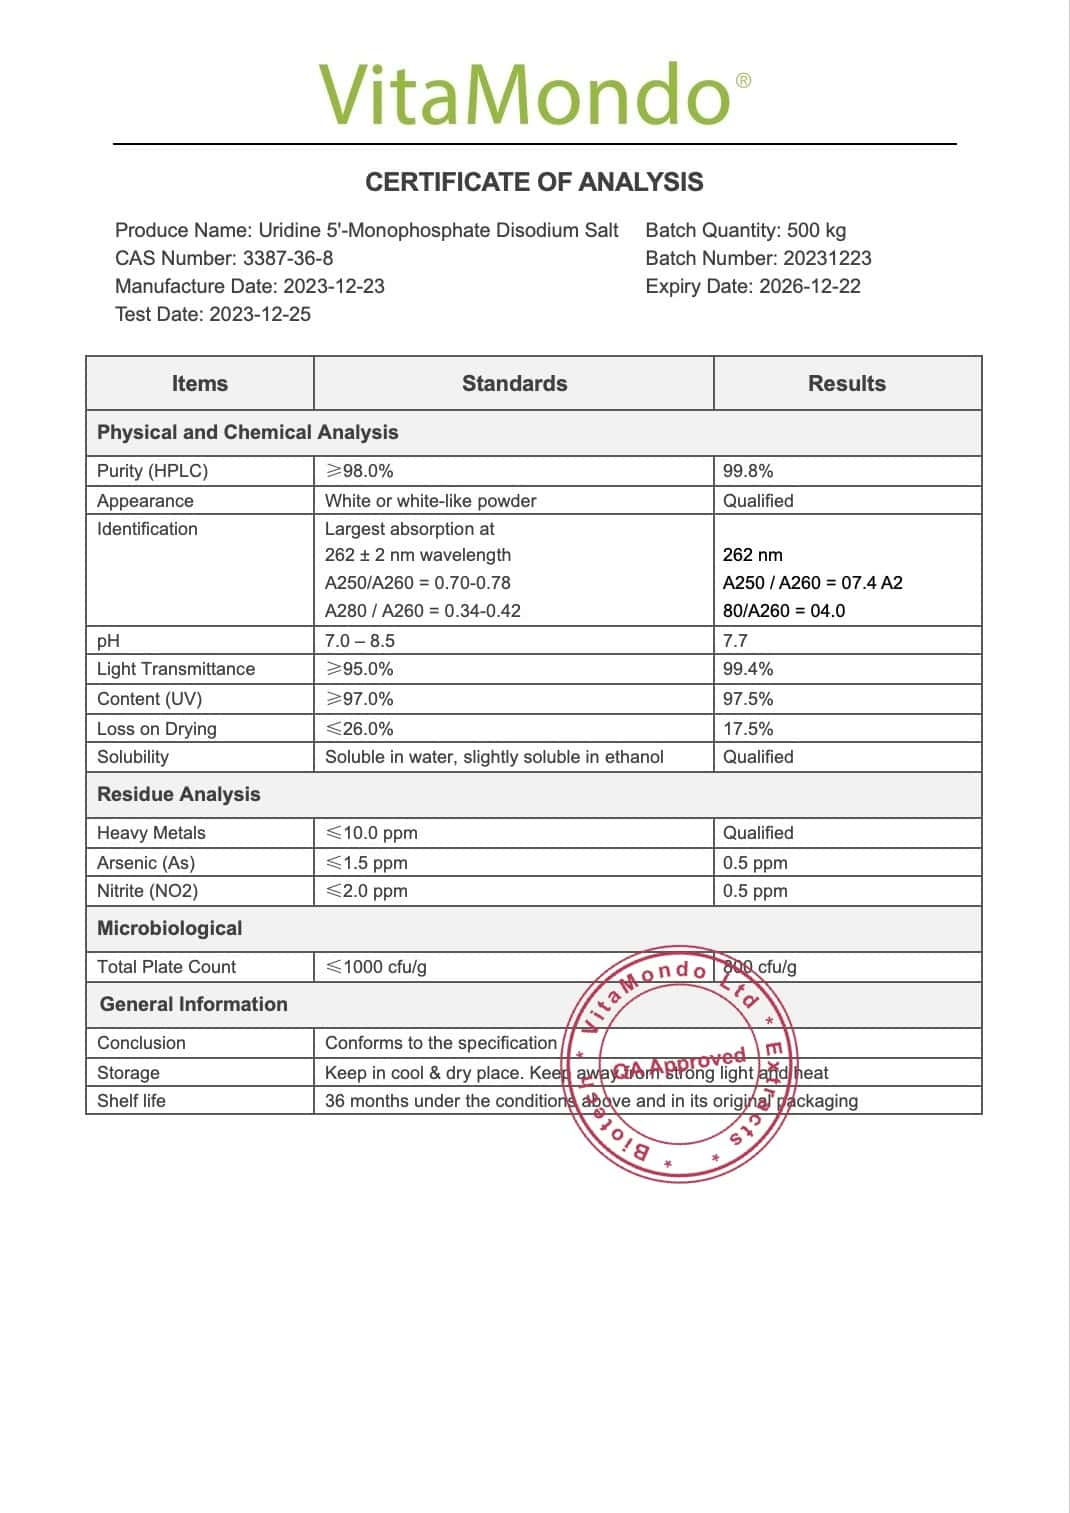 Premium Uridine Monophosphate (UMP) 99% COA VitaMondo stamped